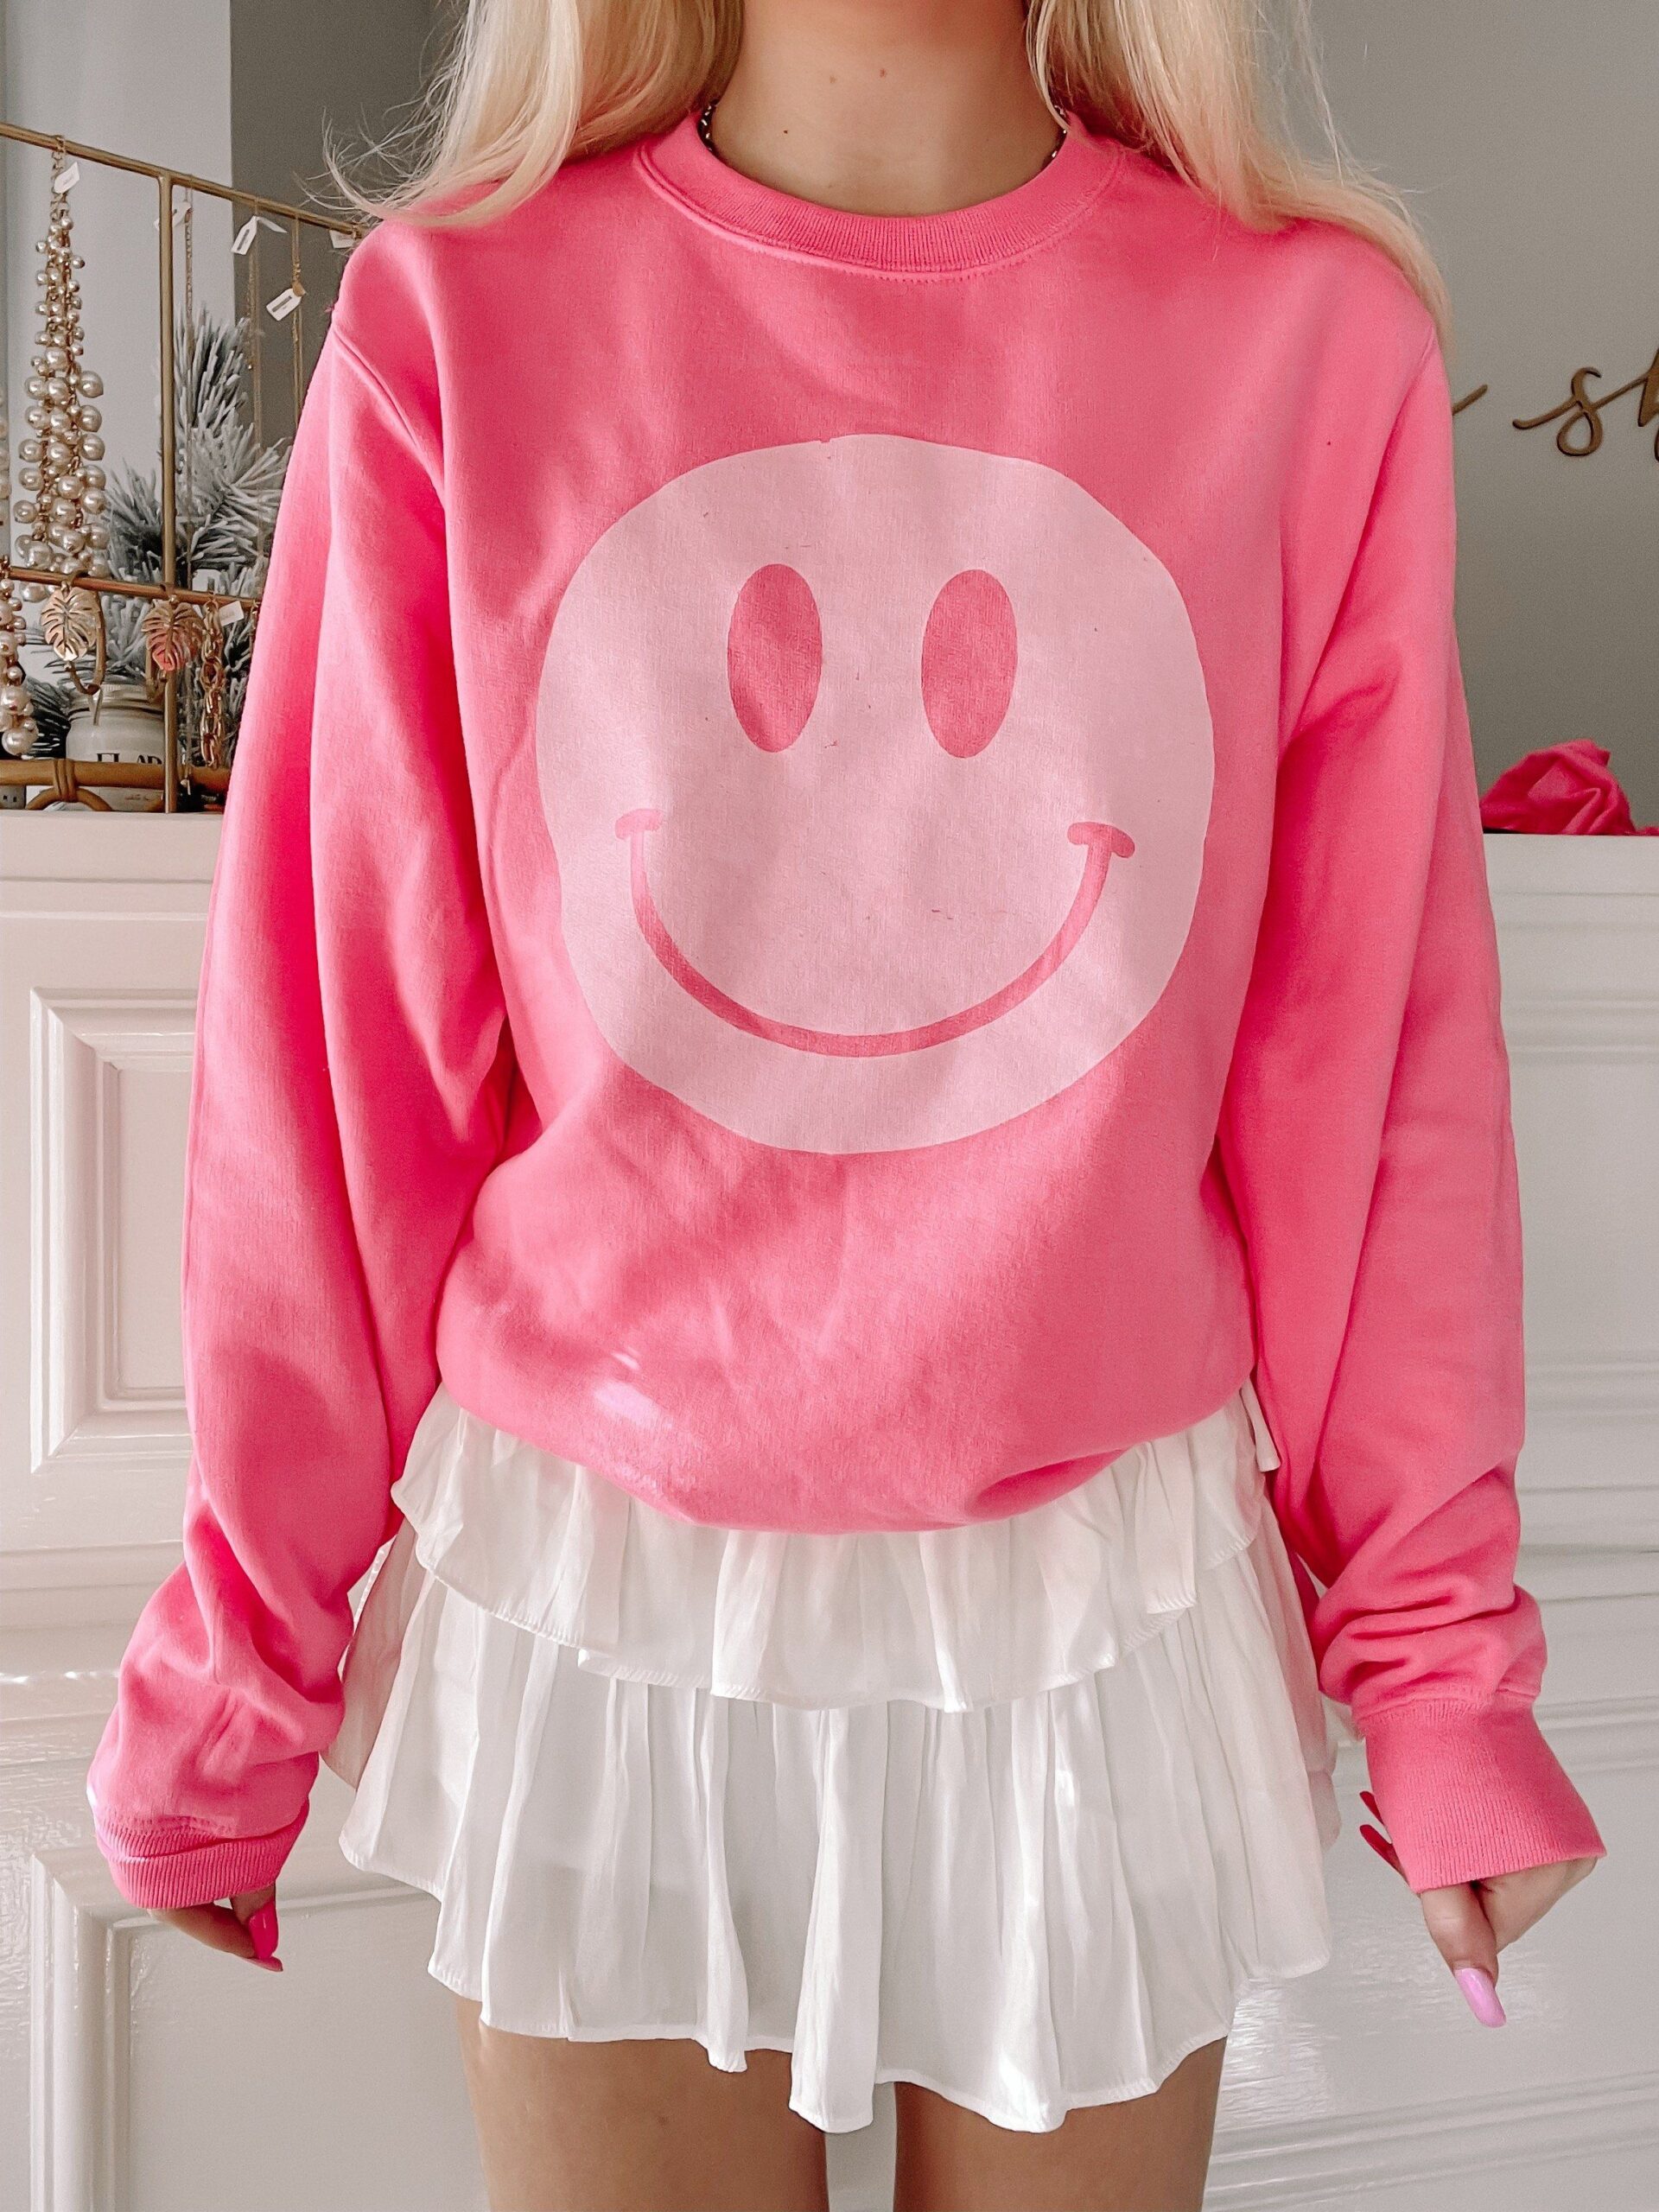 Go stylish with pink sweatshirts